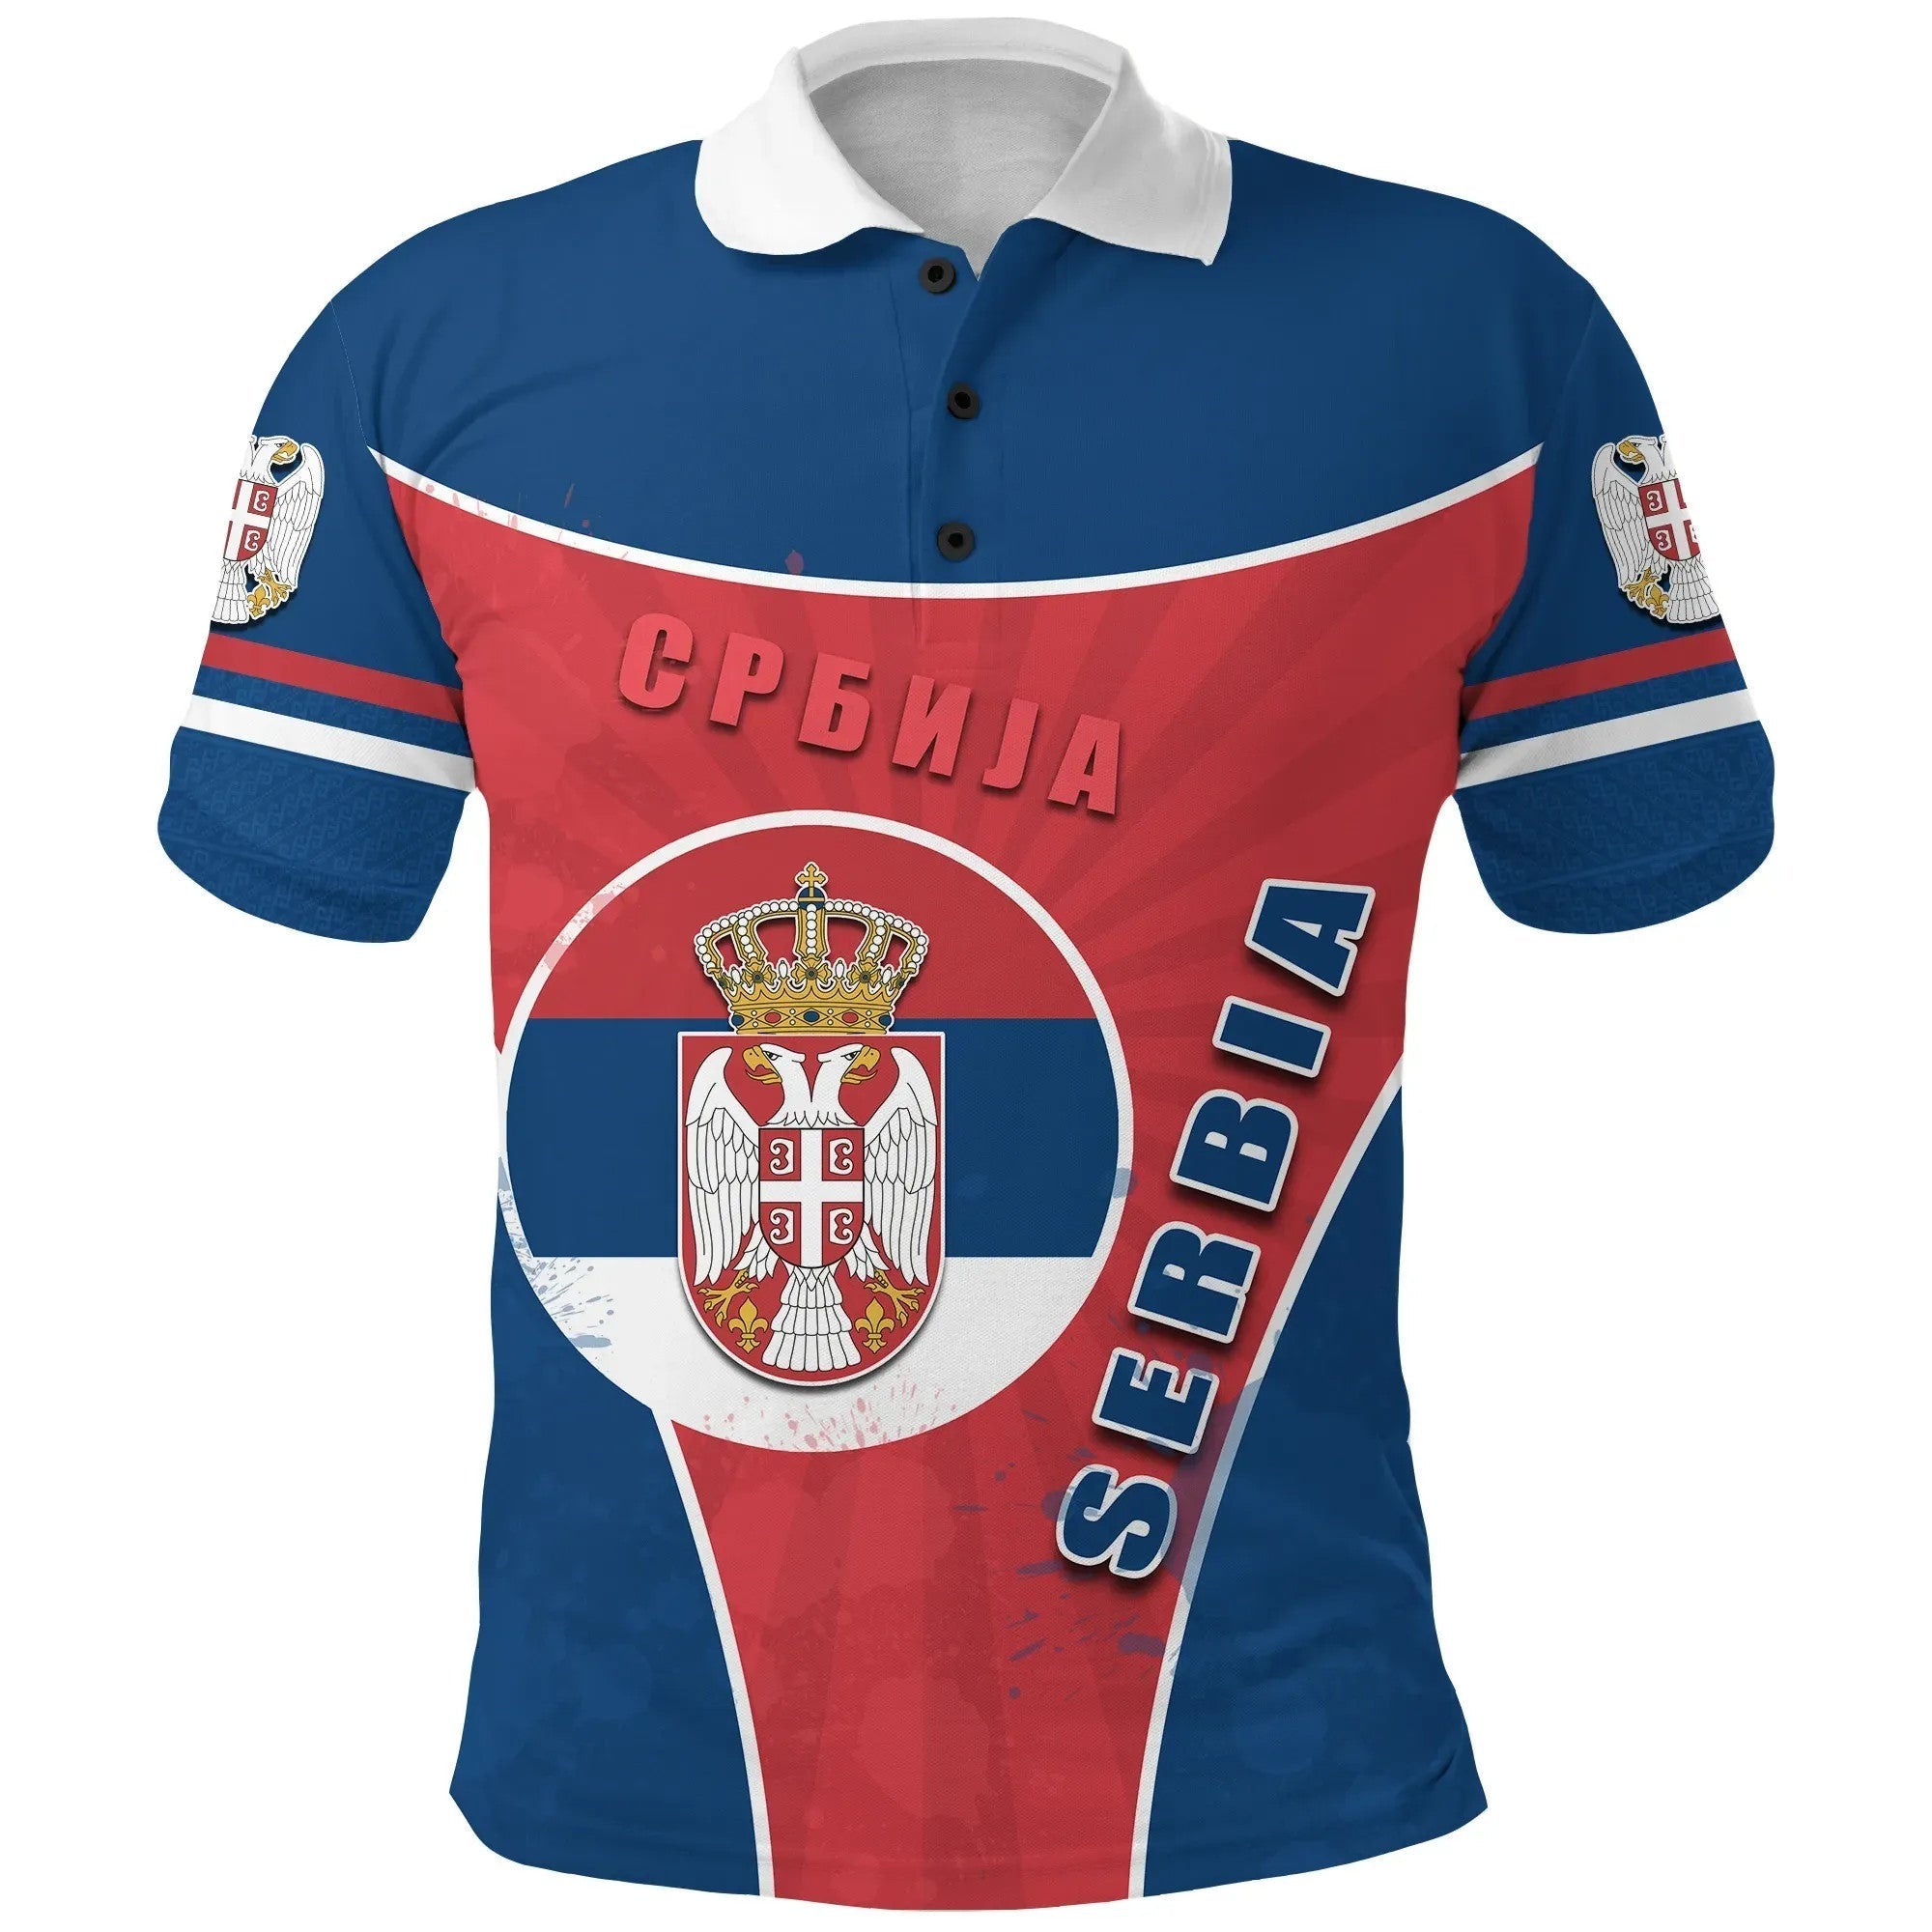 serbia-polo-shirt-circle-stripes-flag-balkan